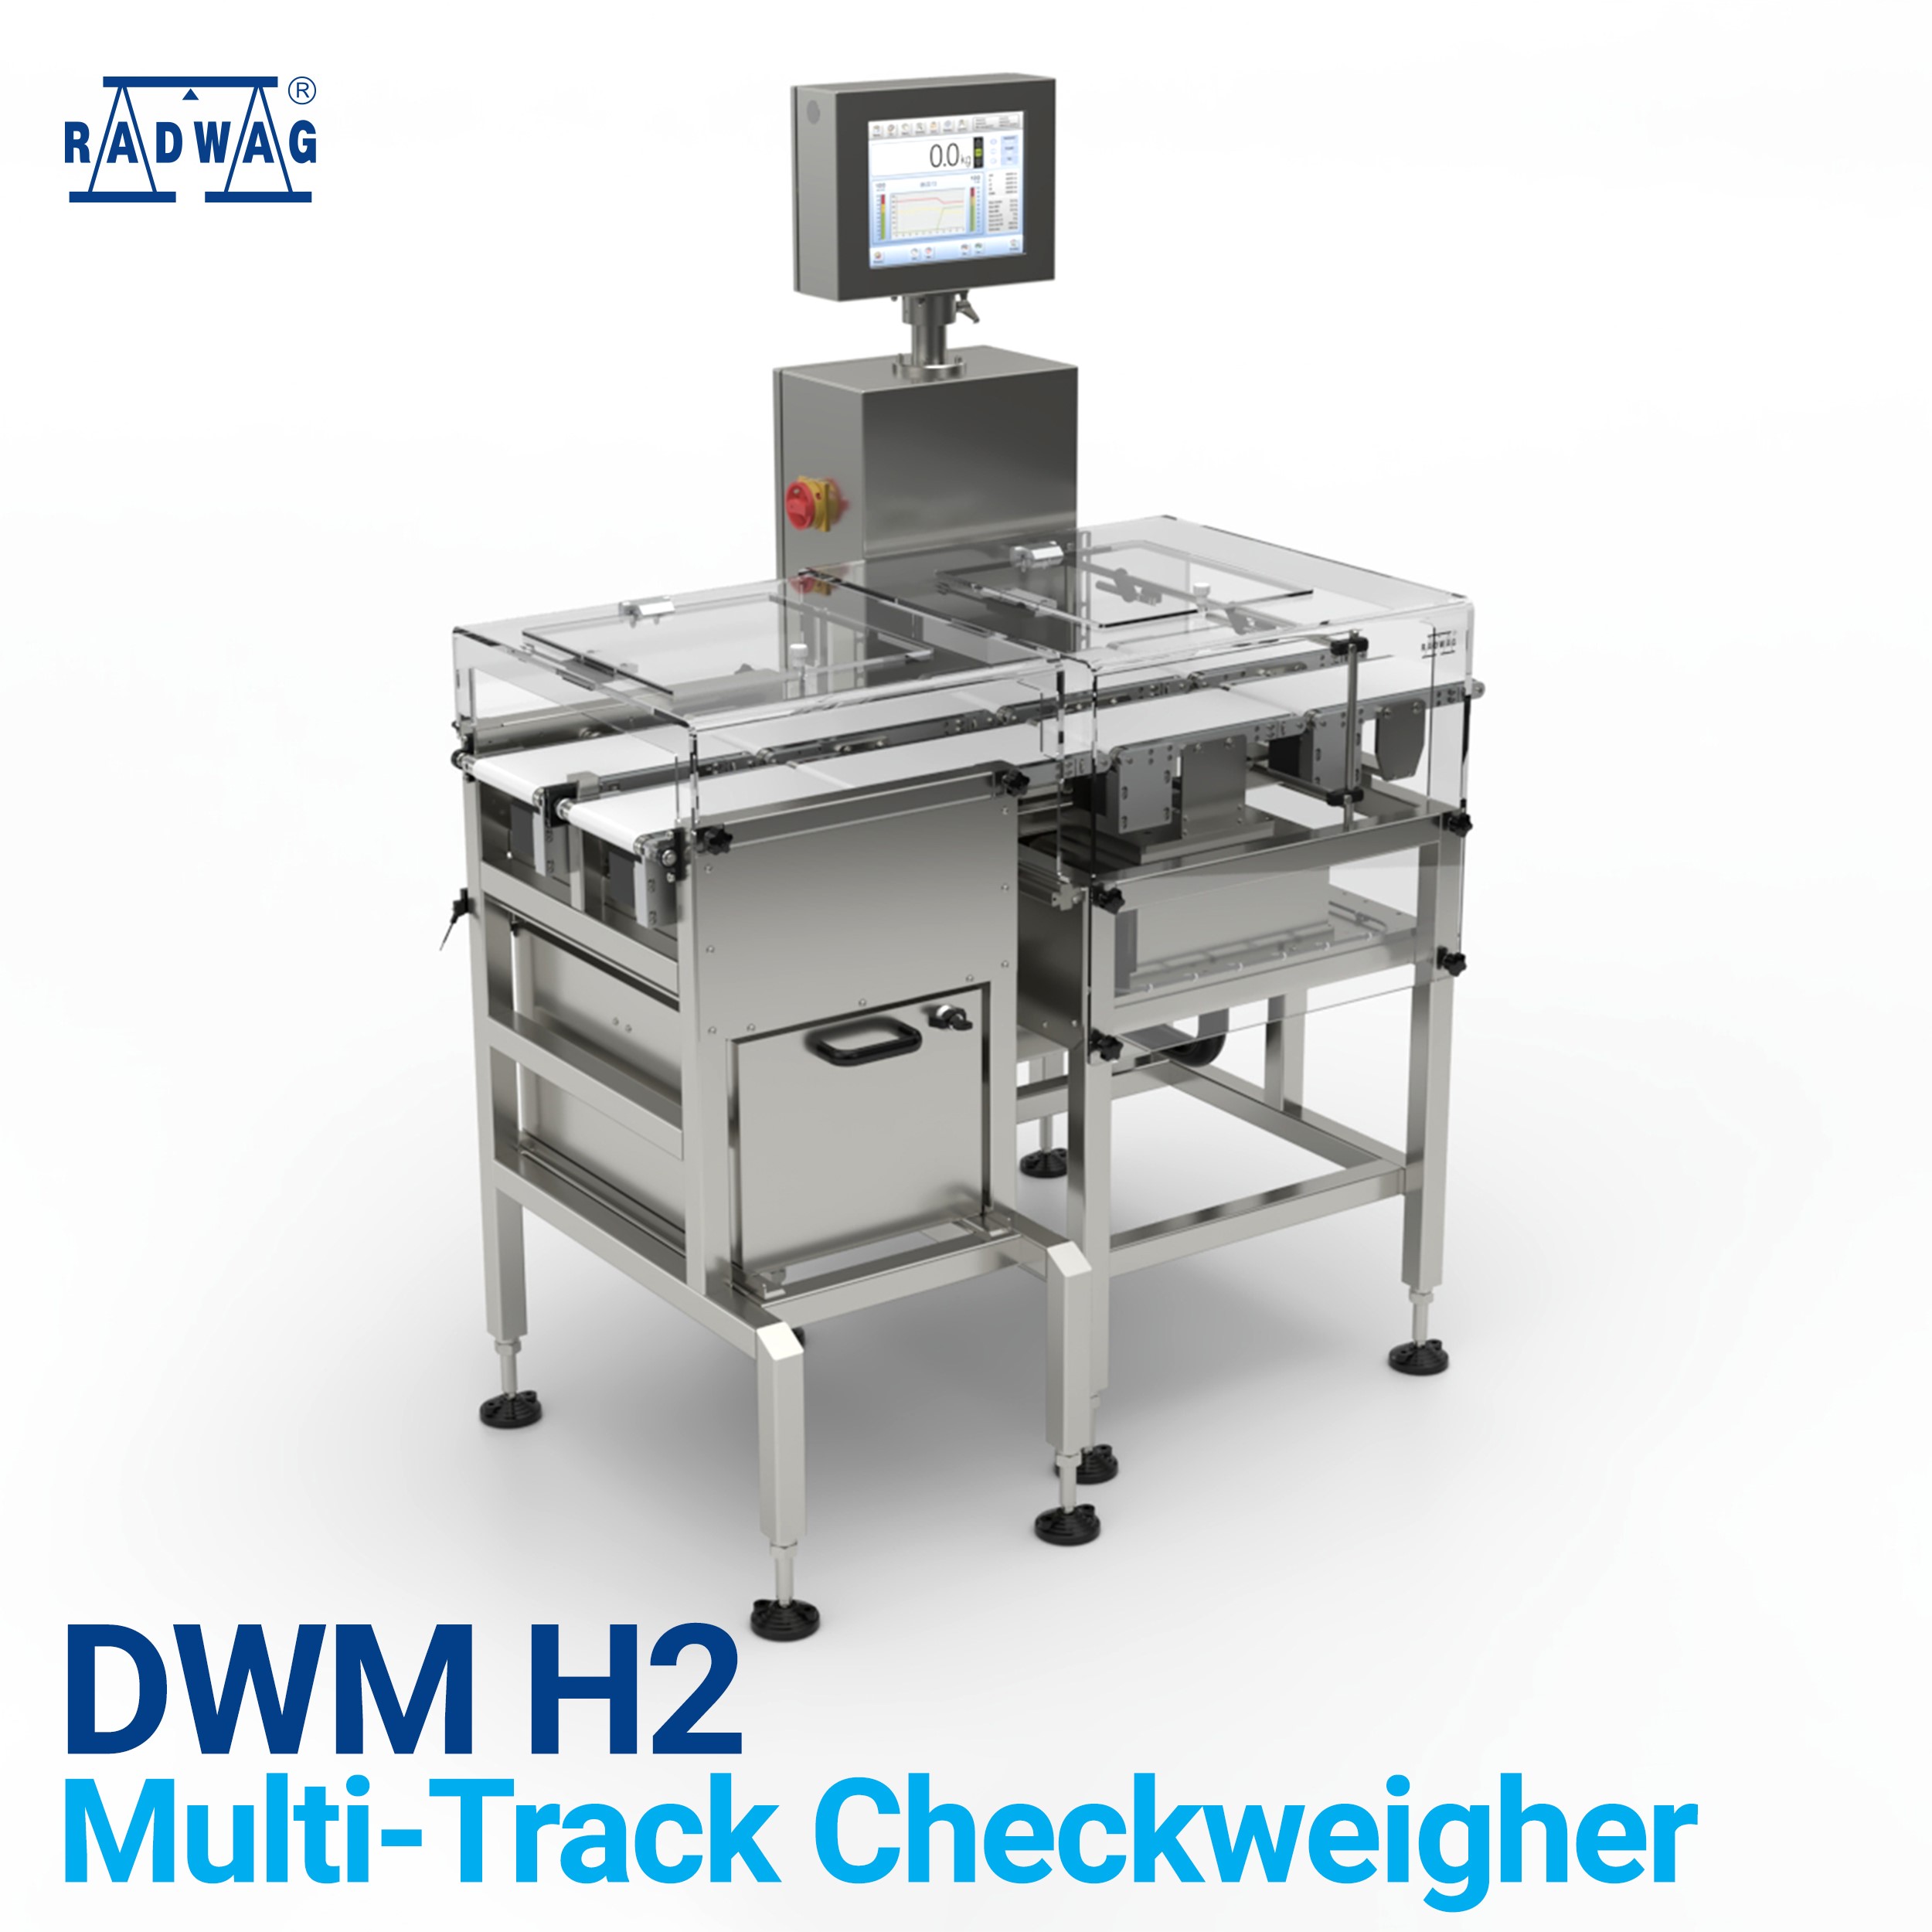 RADWAG DWM H2 Multi-Track Checkweigher